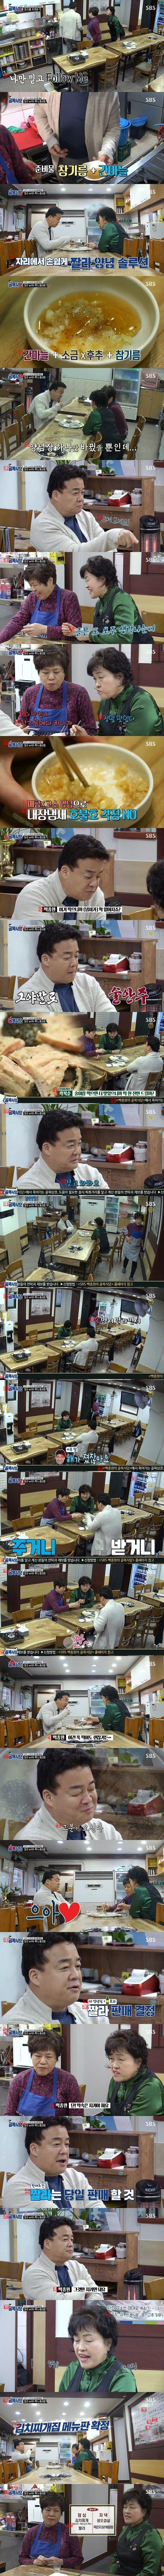 The restaurant where the strict Jongwon Baek compromised